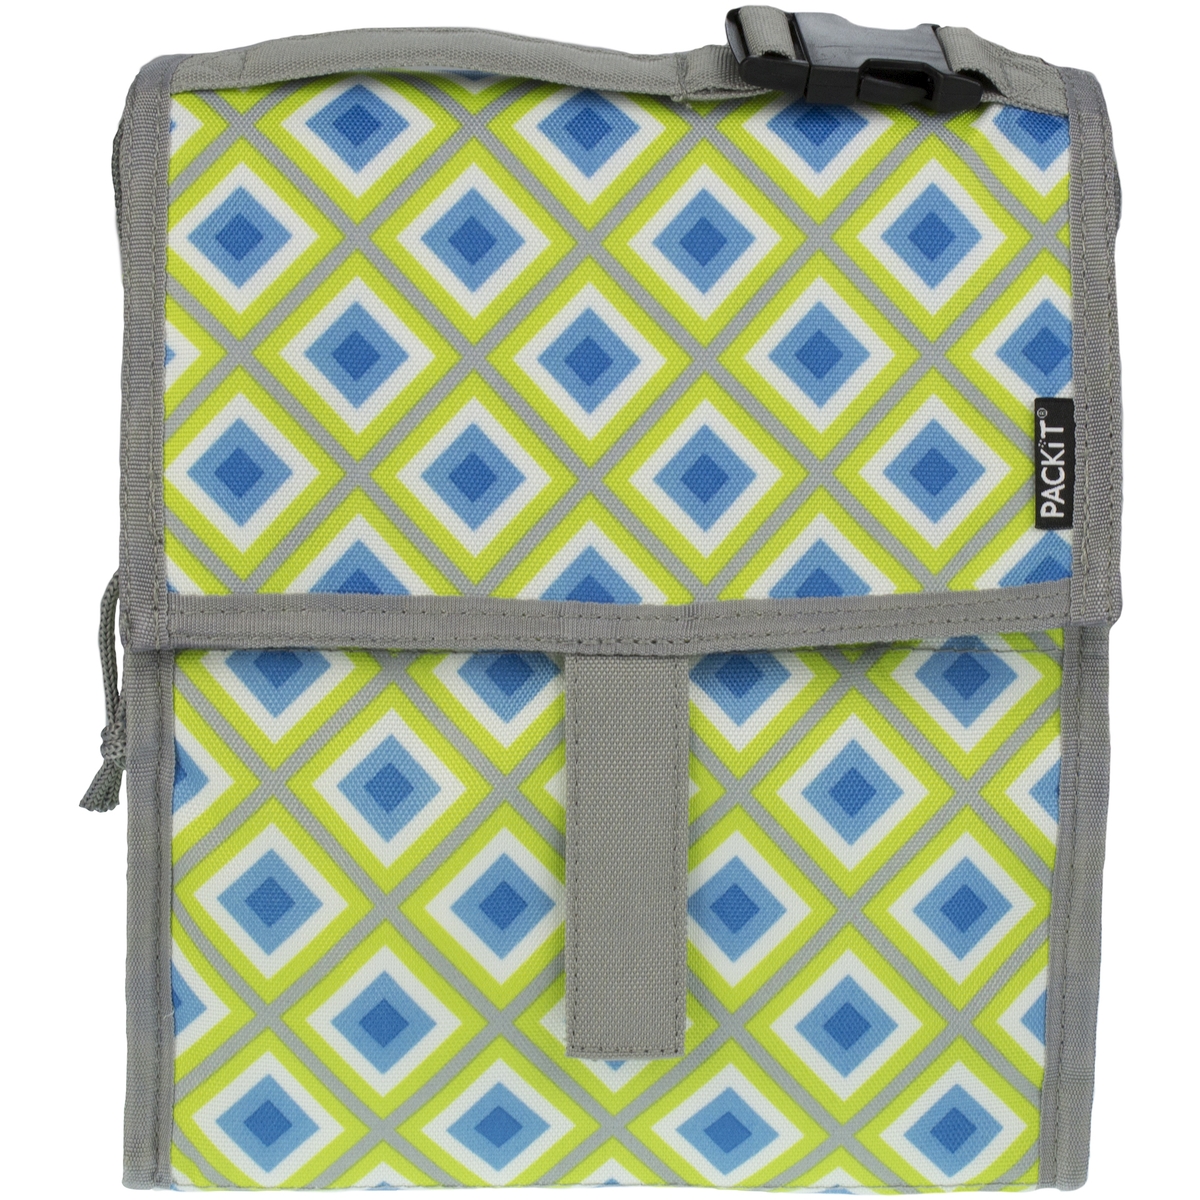     Lunch bag Geometric (PACKiT PACKIT0027)